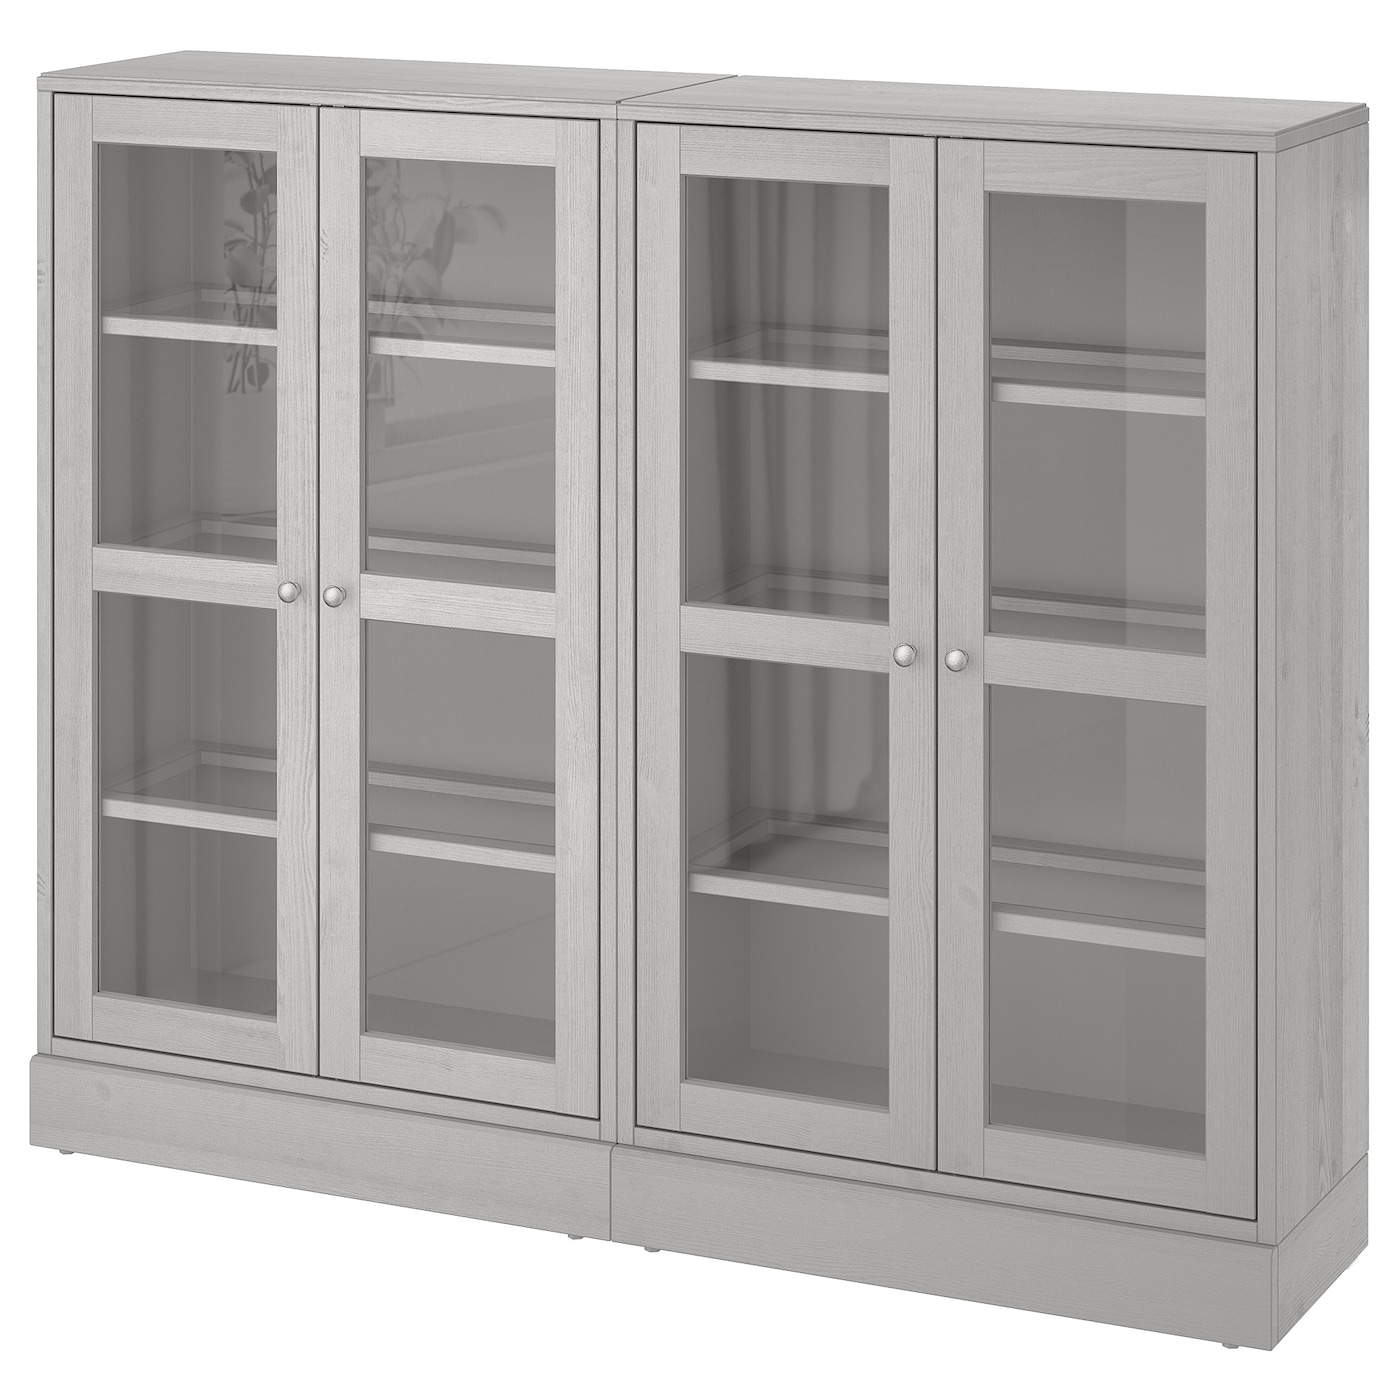 Шкаф - HAVSTA IKEA/ ХАВСТА ИКЕА, 162x134x37см, серый